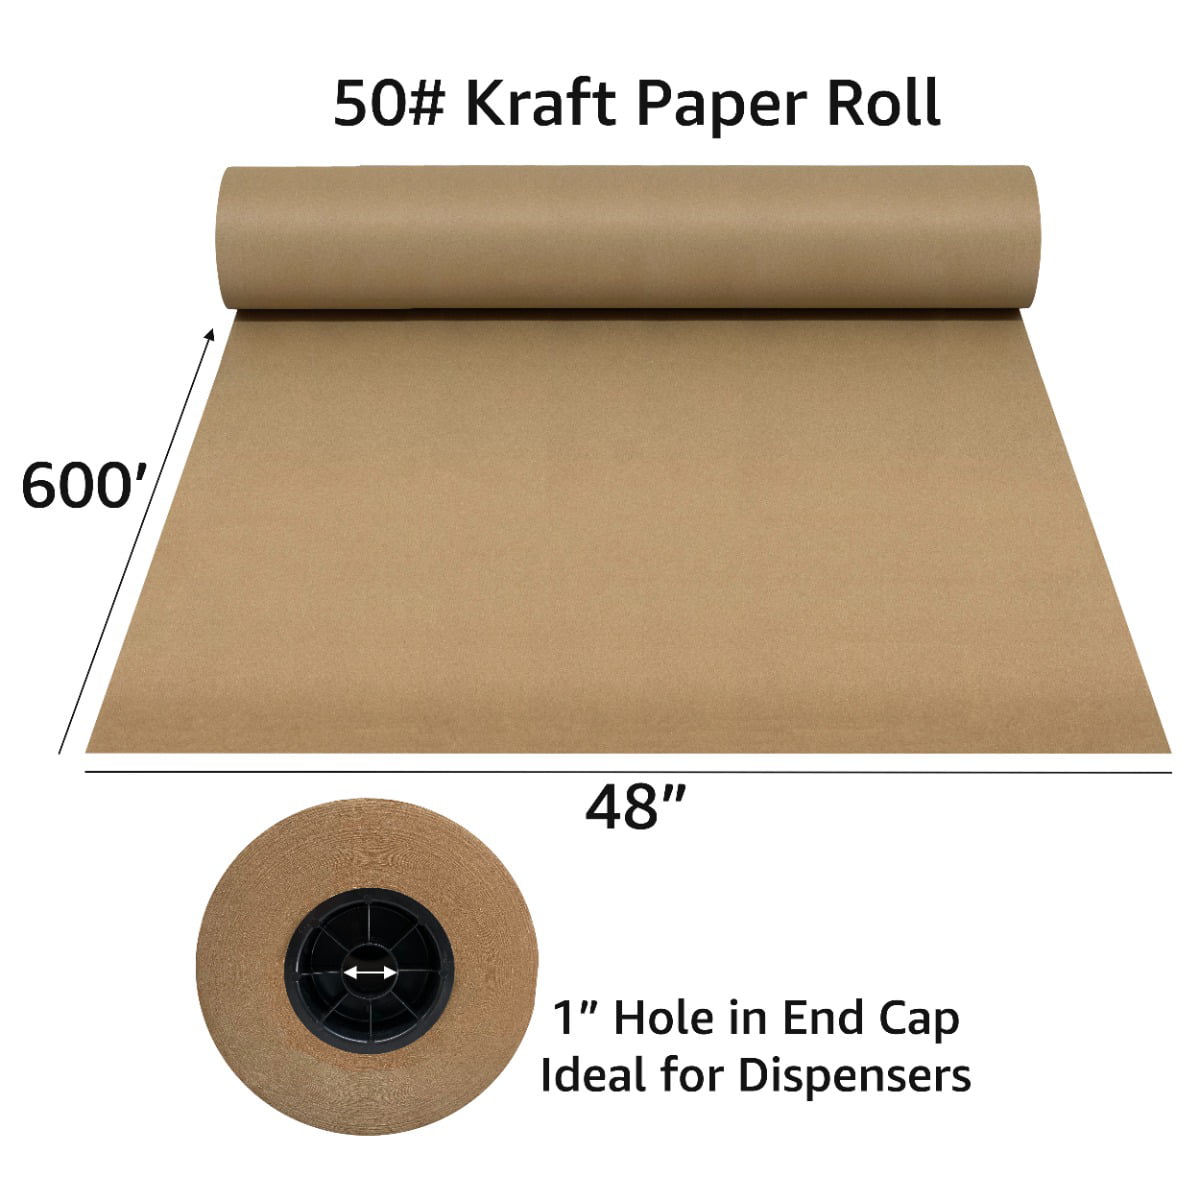 UOFFICE Kraft Paper Roll 600'x48 50lb Strength Brown Shipping Paper Fill